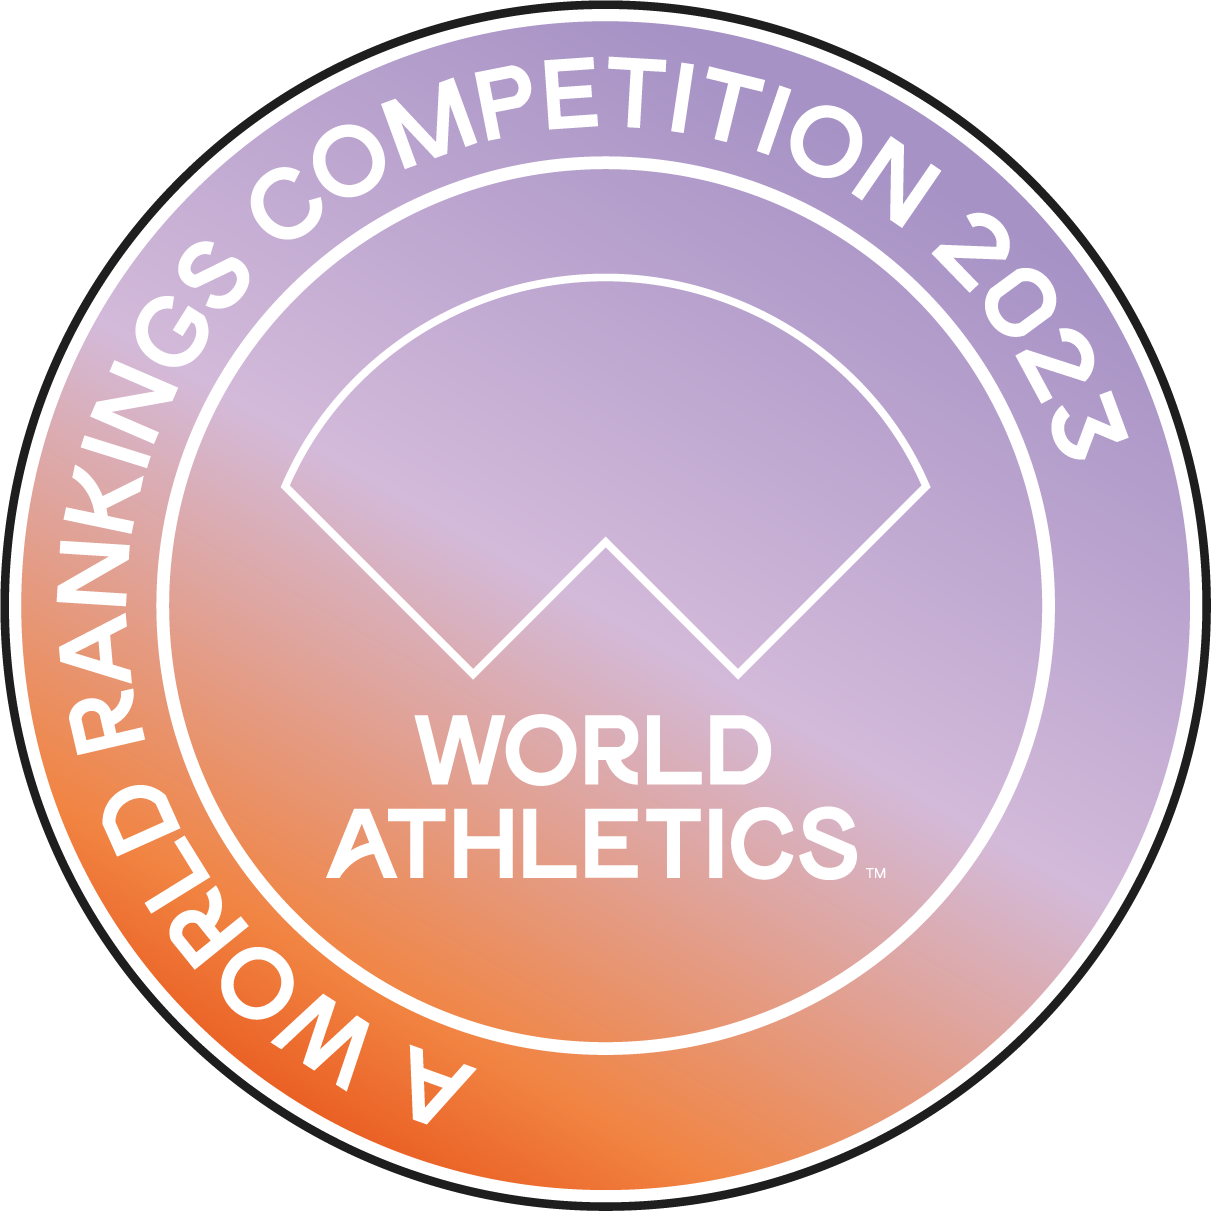 Meeting valido per il ranking worldathletics